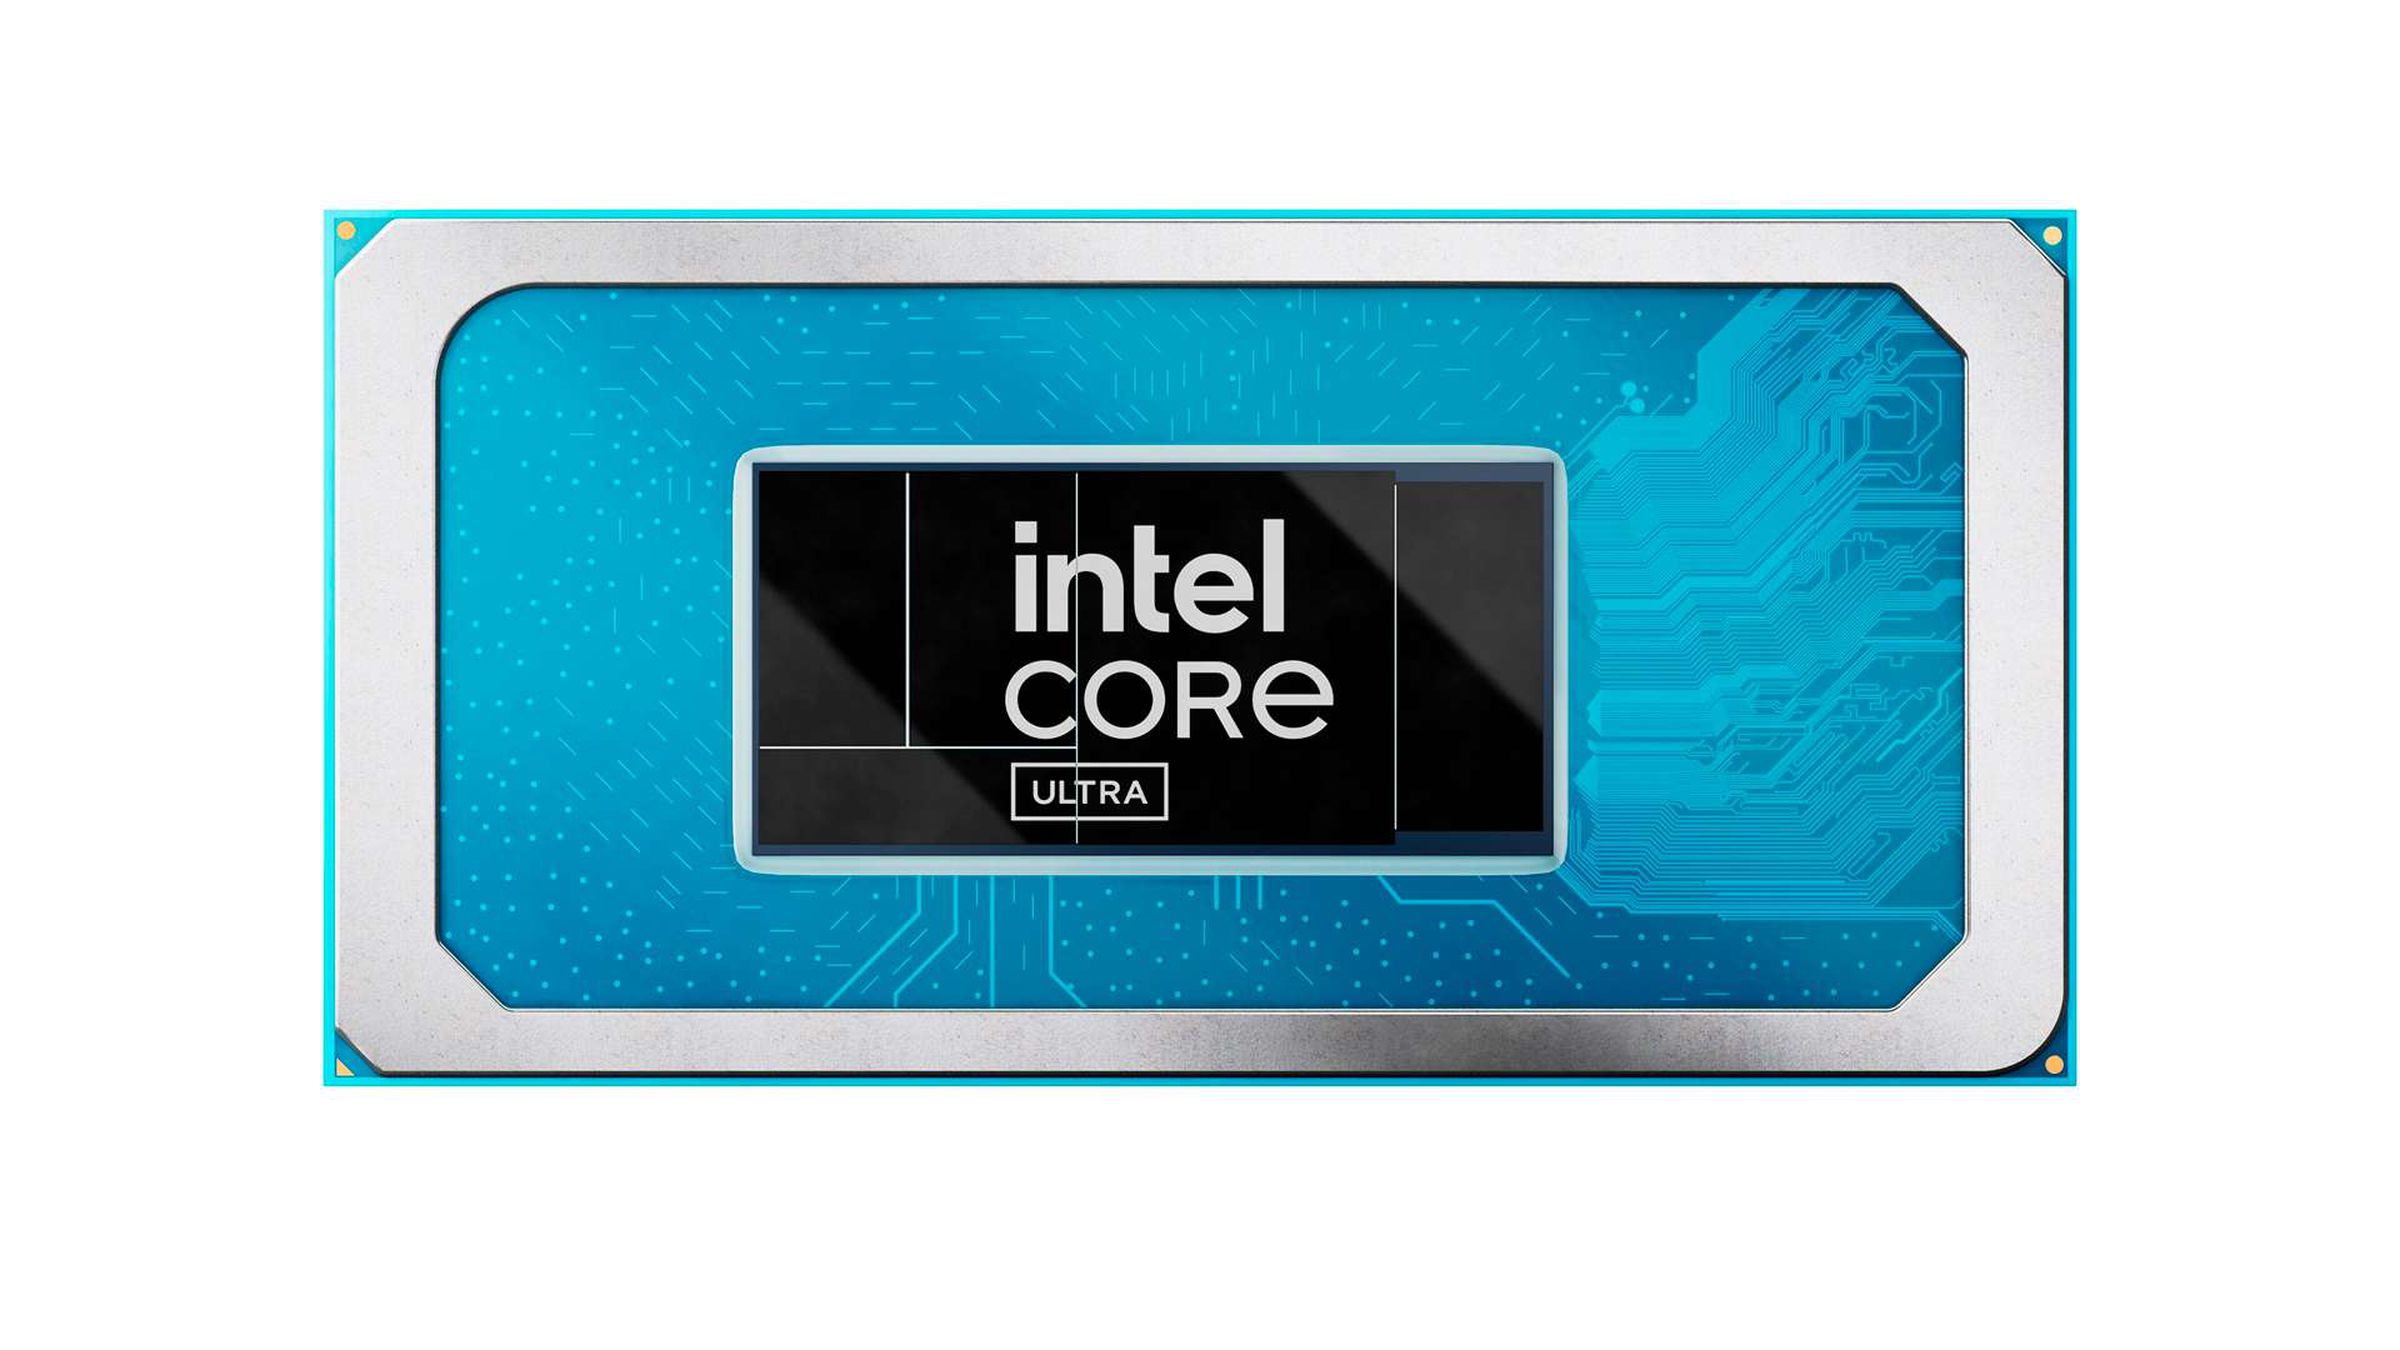 Intel’s new Core Ultra chip has dedicated AI silicon.